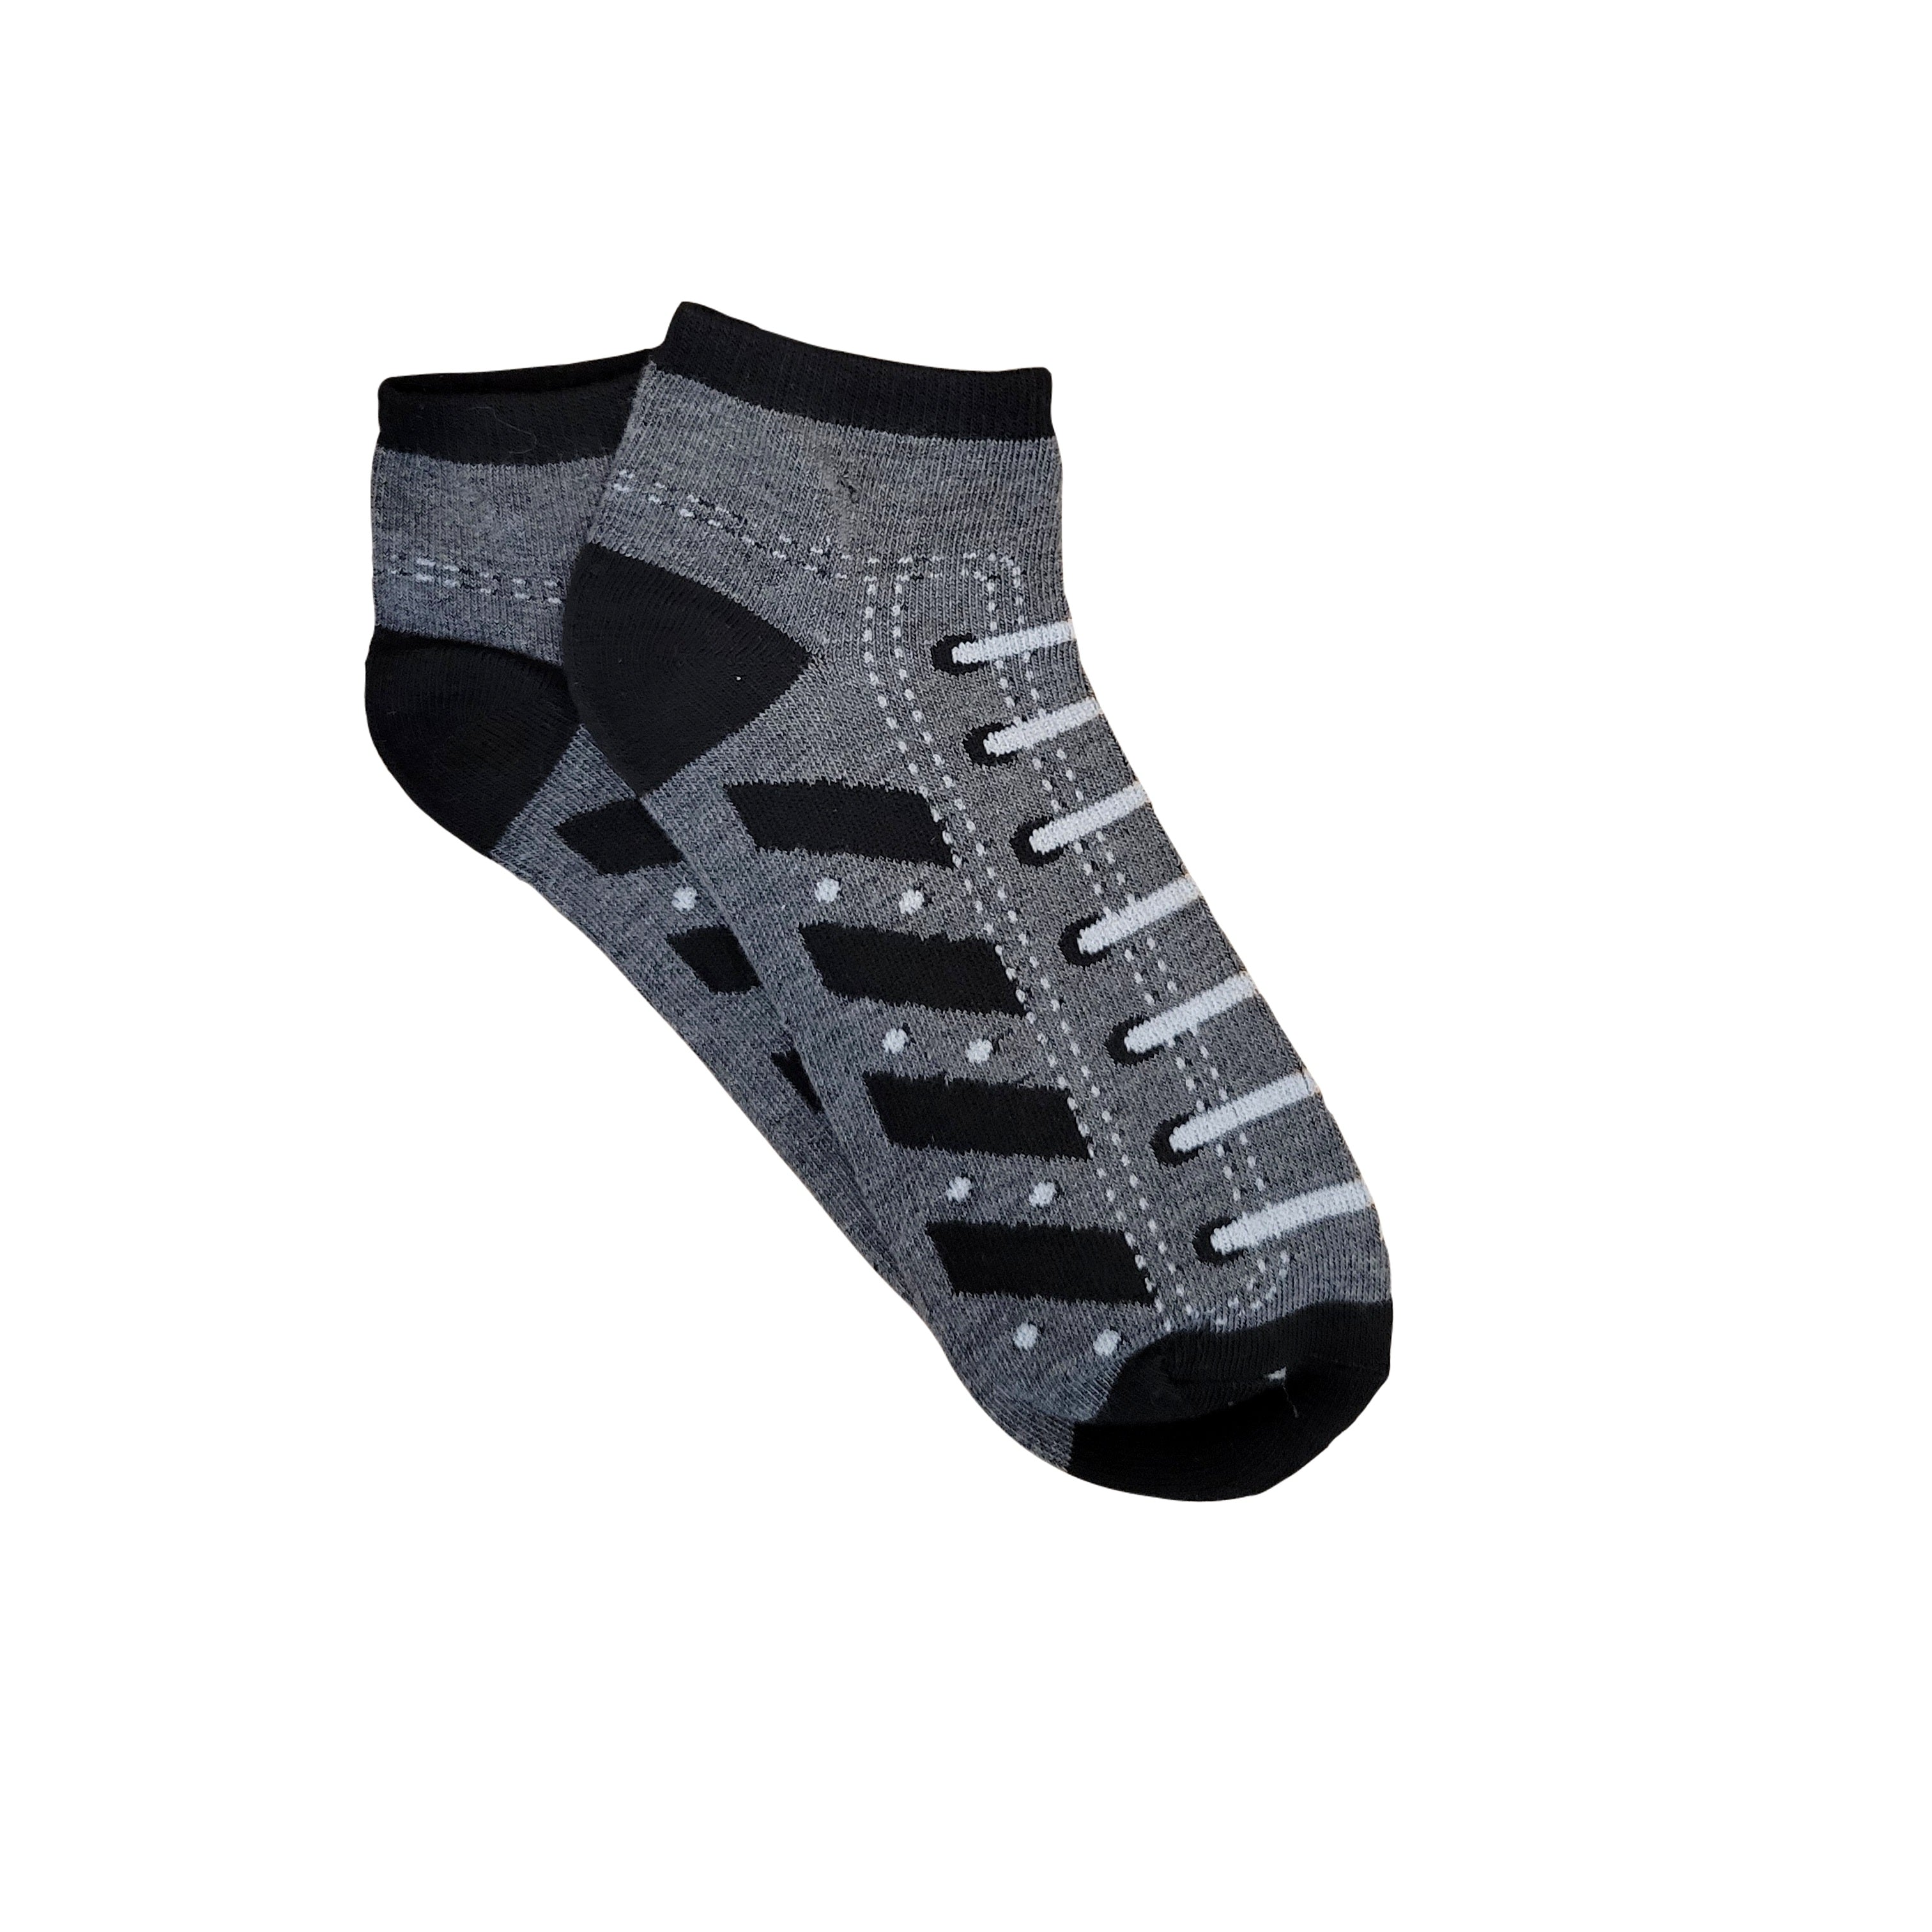 Sneaker Ankle Socks (Adult Large)